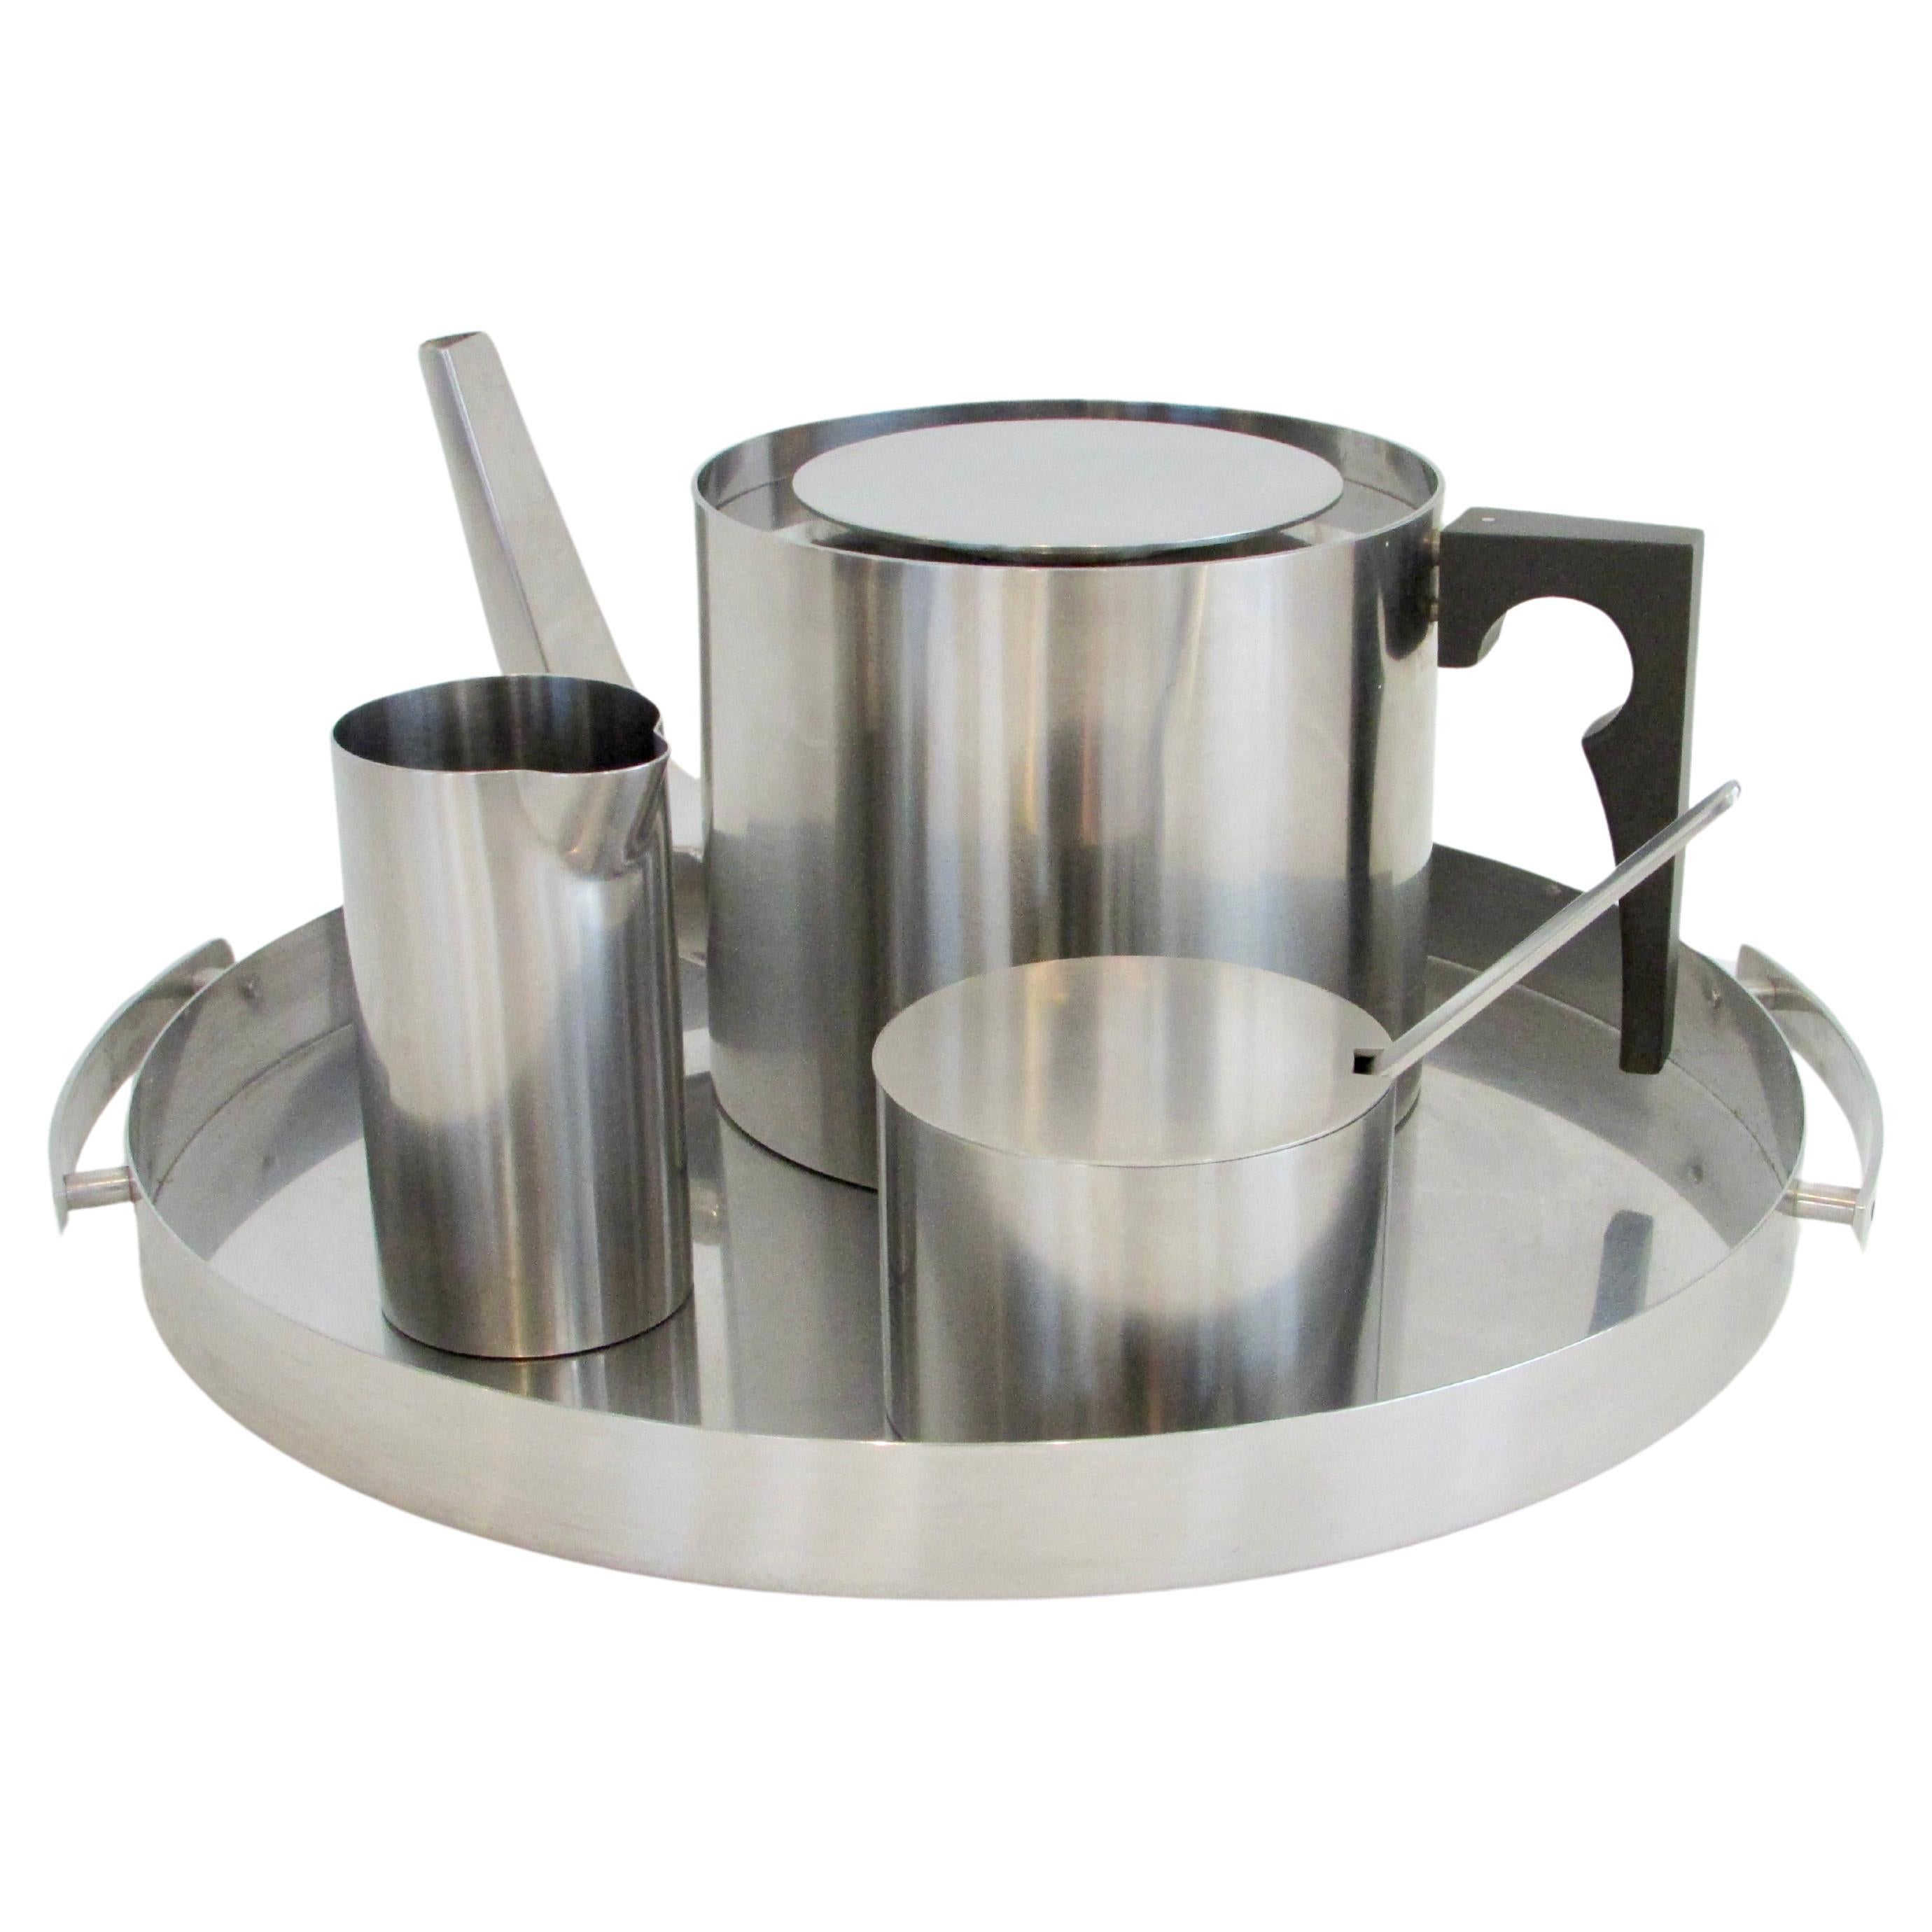 Five piece Arne Jacobsen Stelton stainless steel modernist tea service